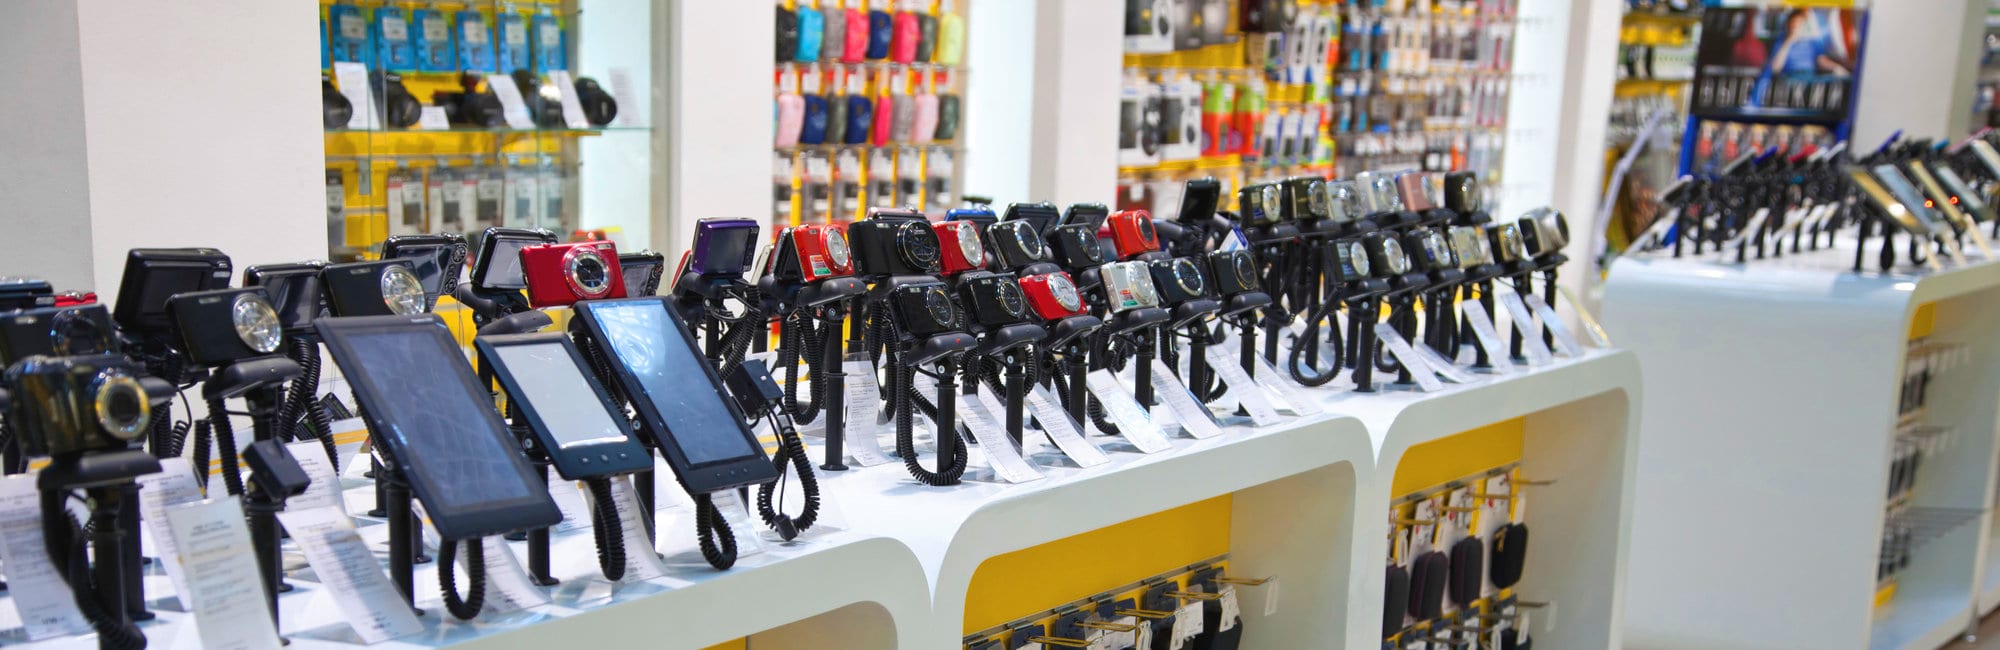 Digital cameras and mobil phones in store